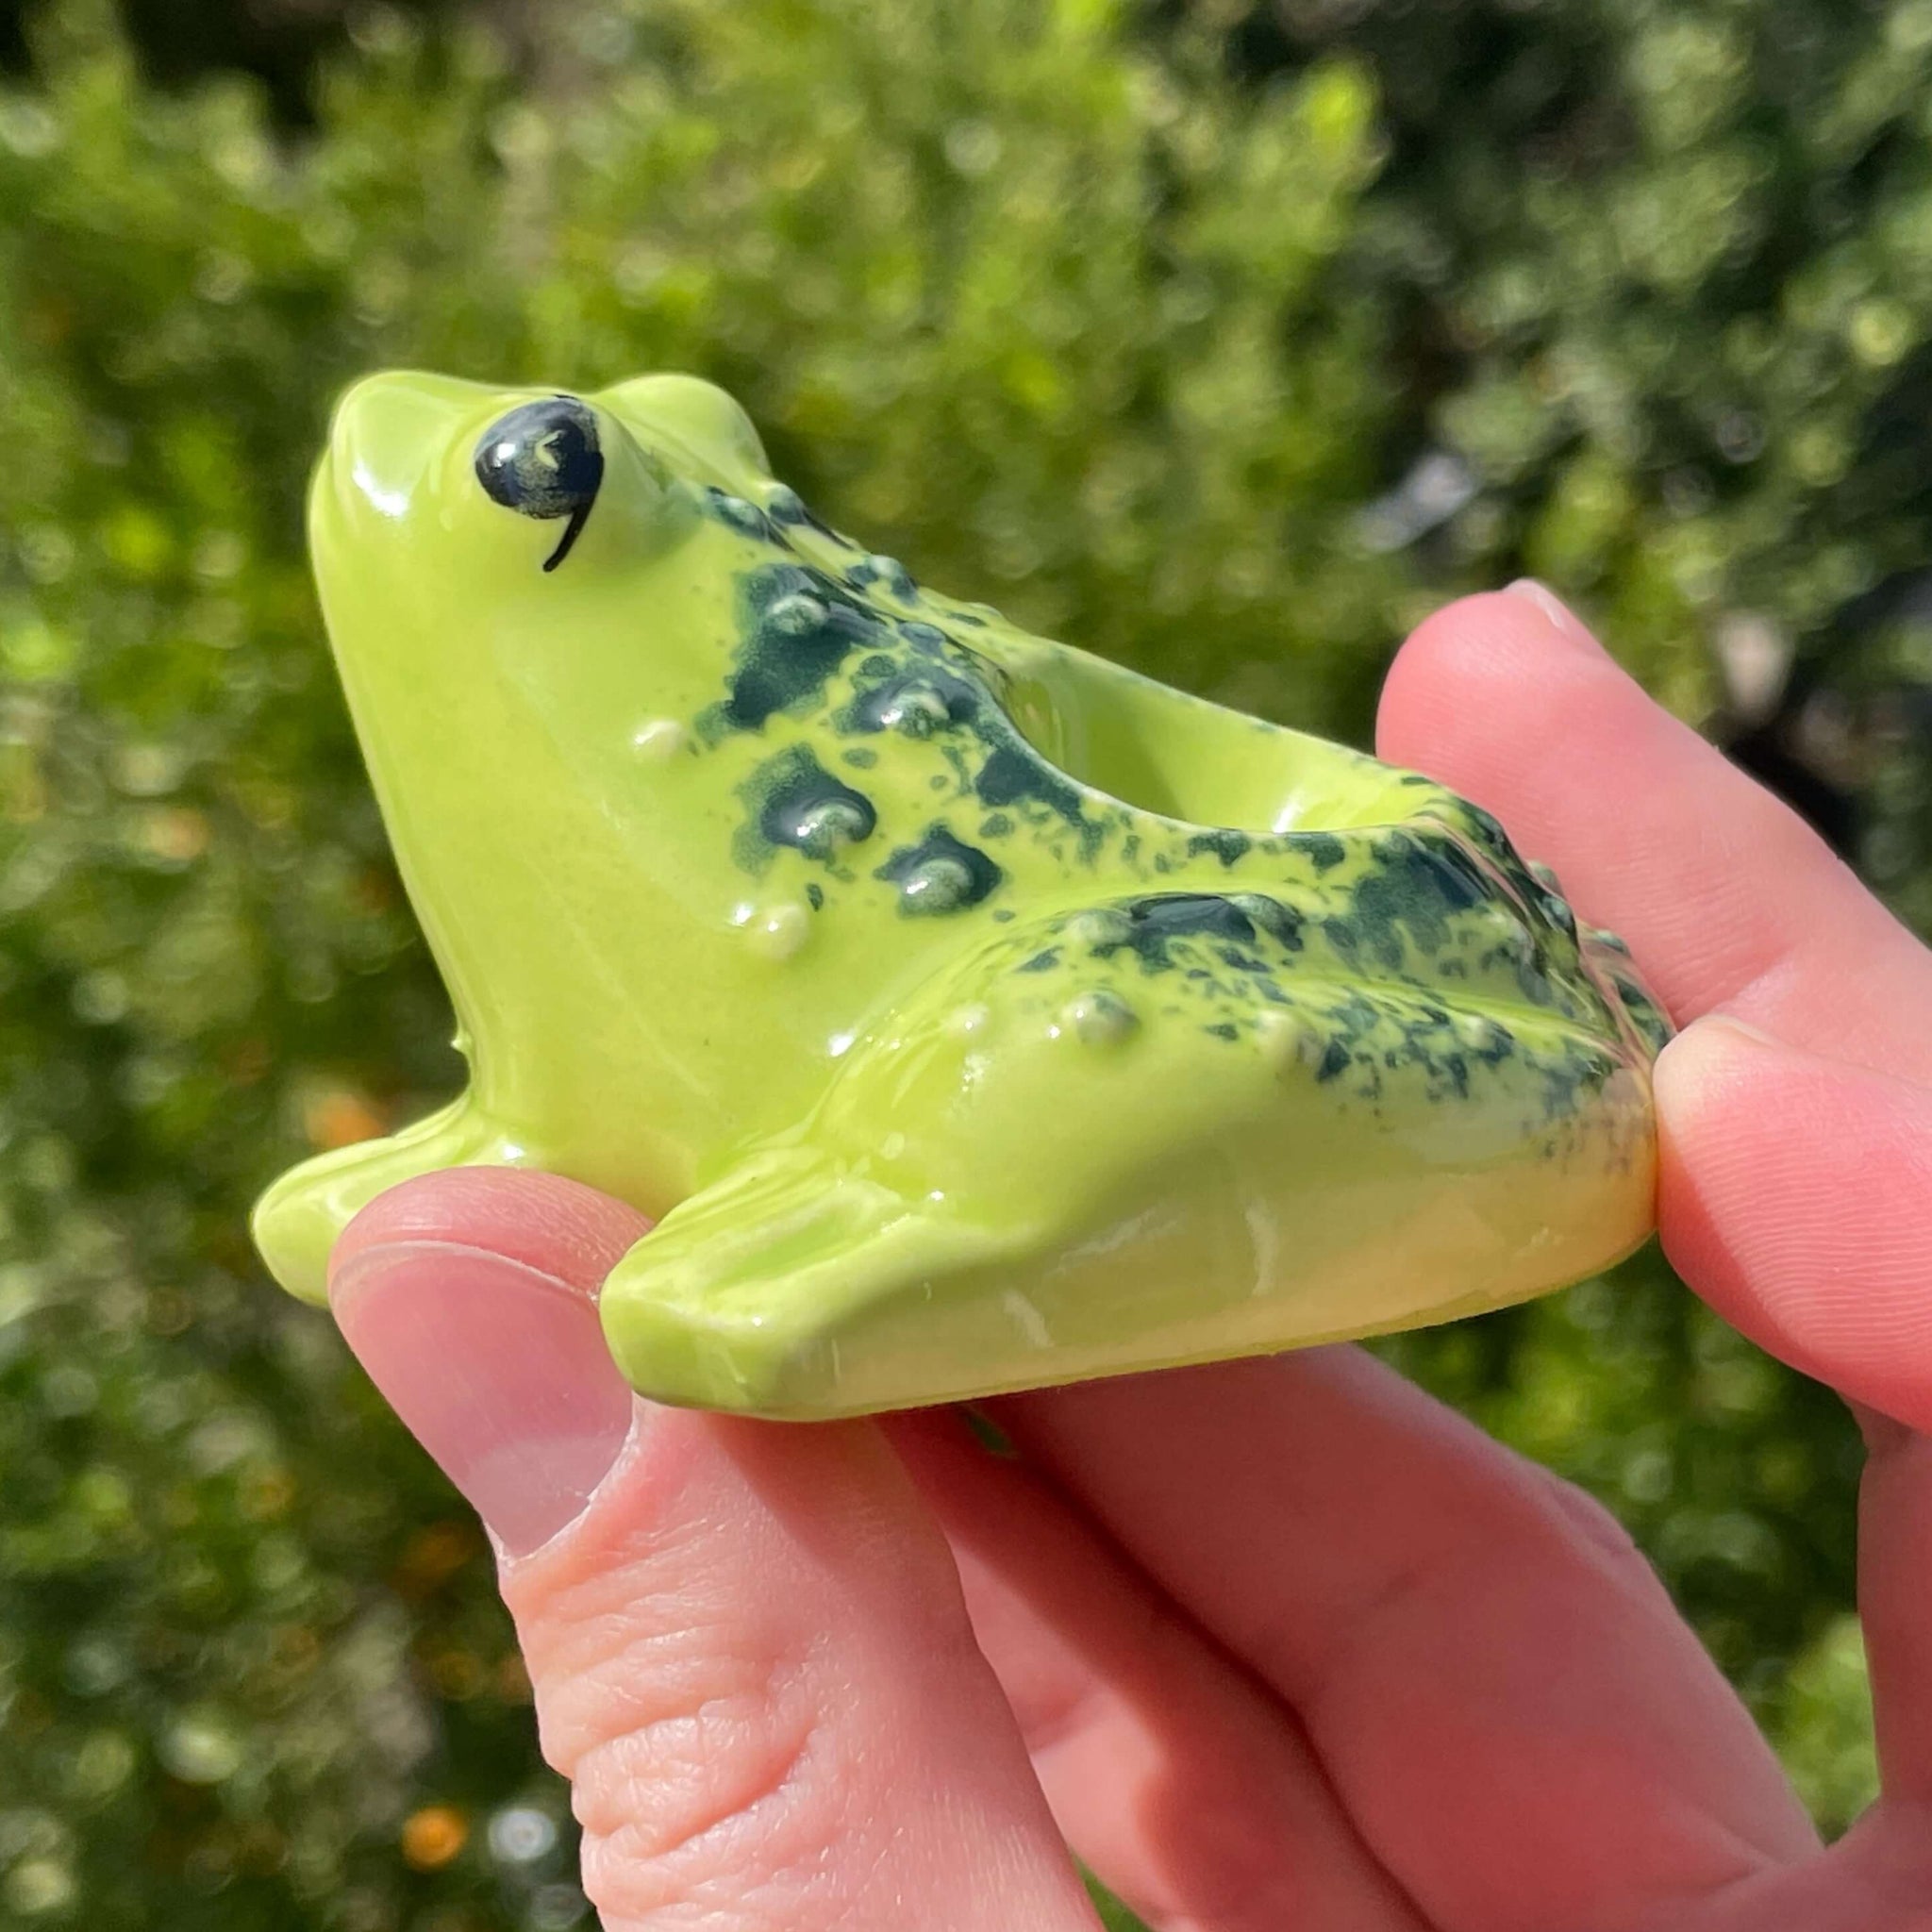 Frog Pipe Cute Ceramic Smoking Froggy Pipe by Cosmos Art Ceramics